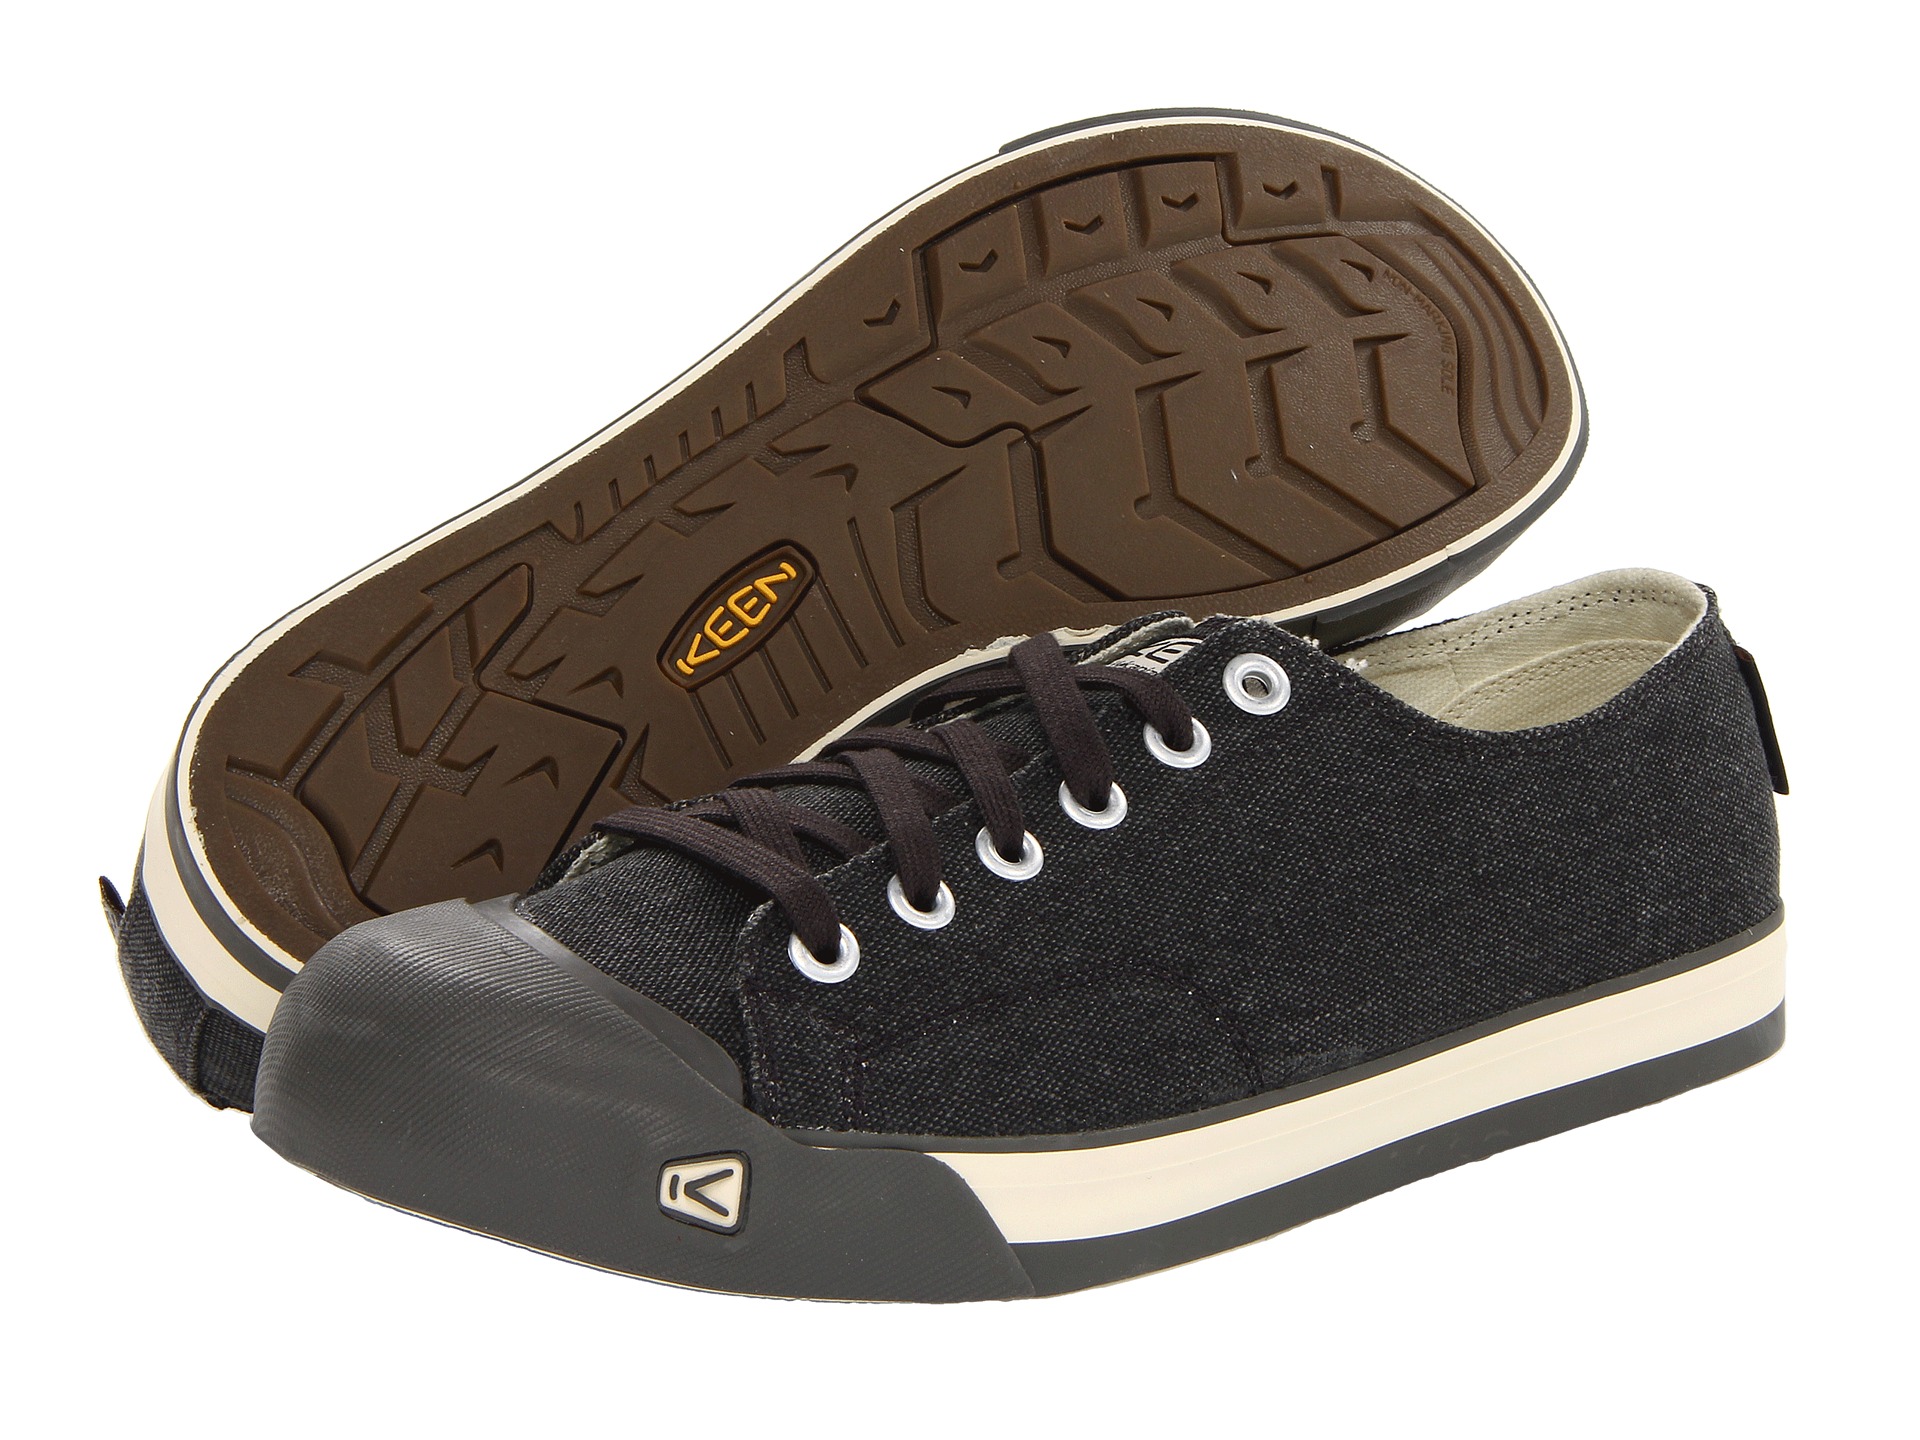 Keen Coronado, Shoes | Shipped Free at Zappos